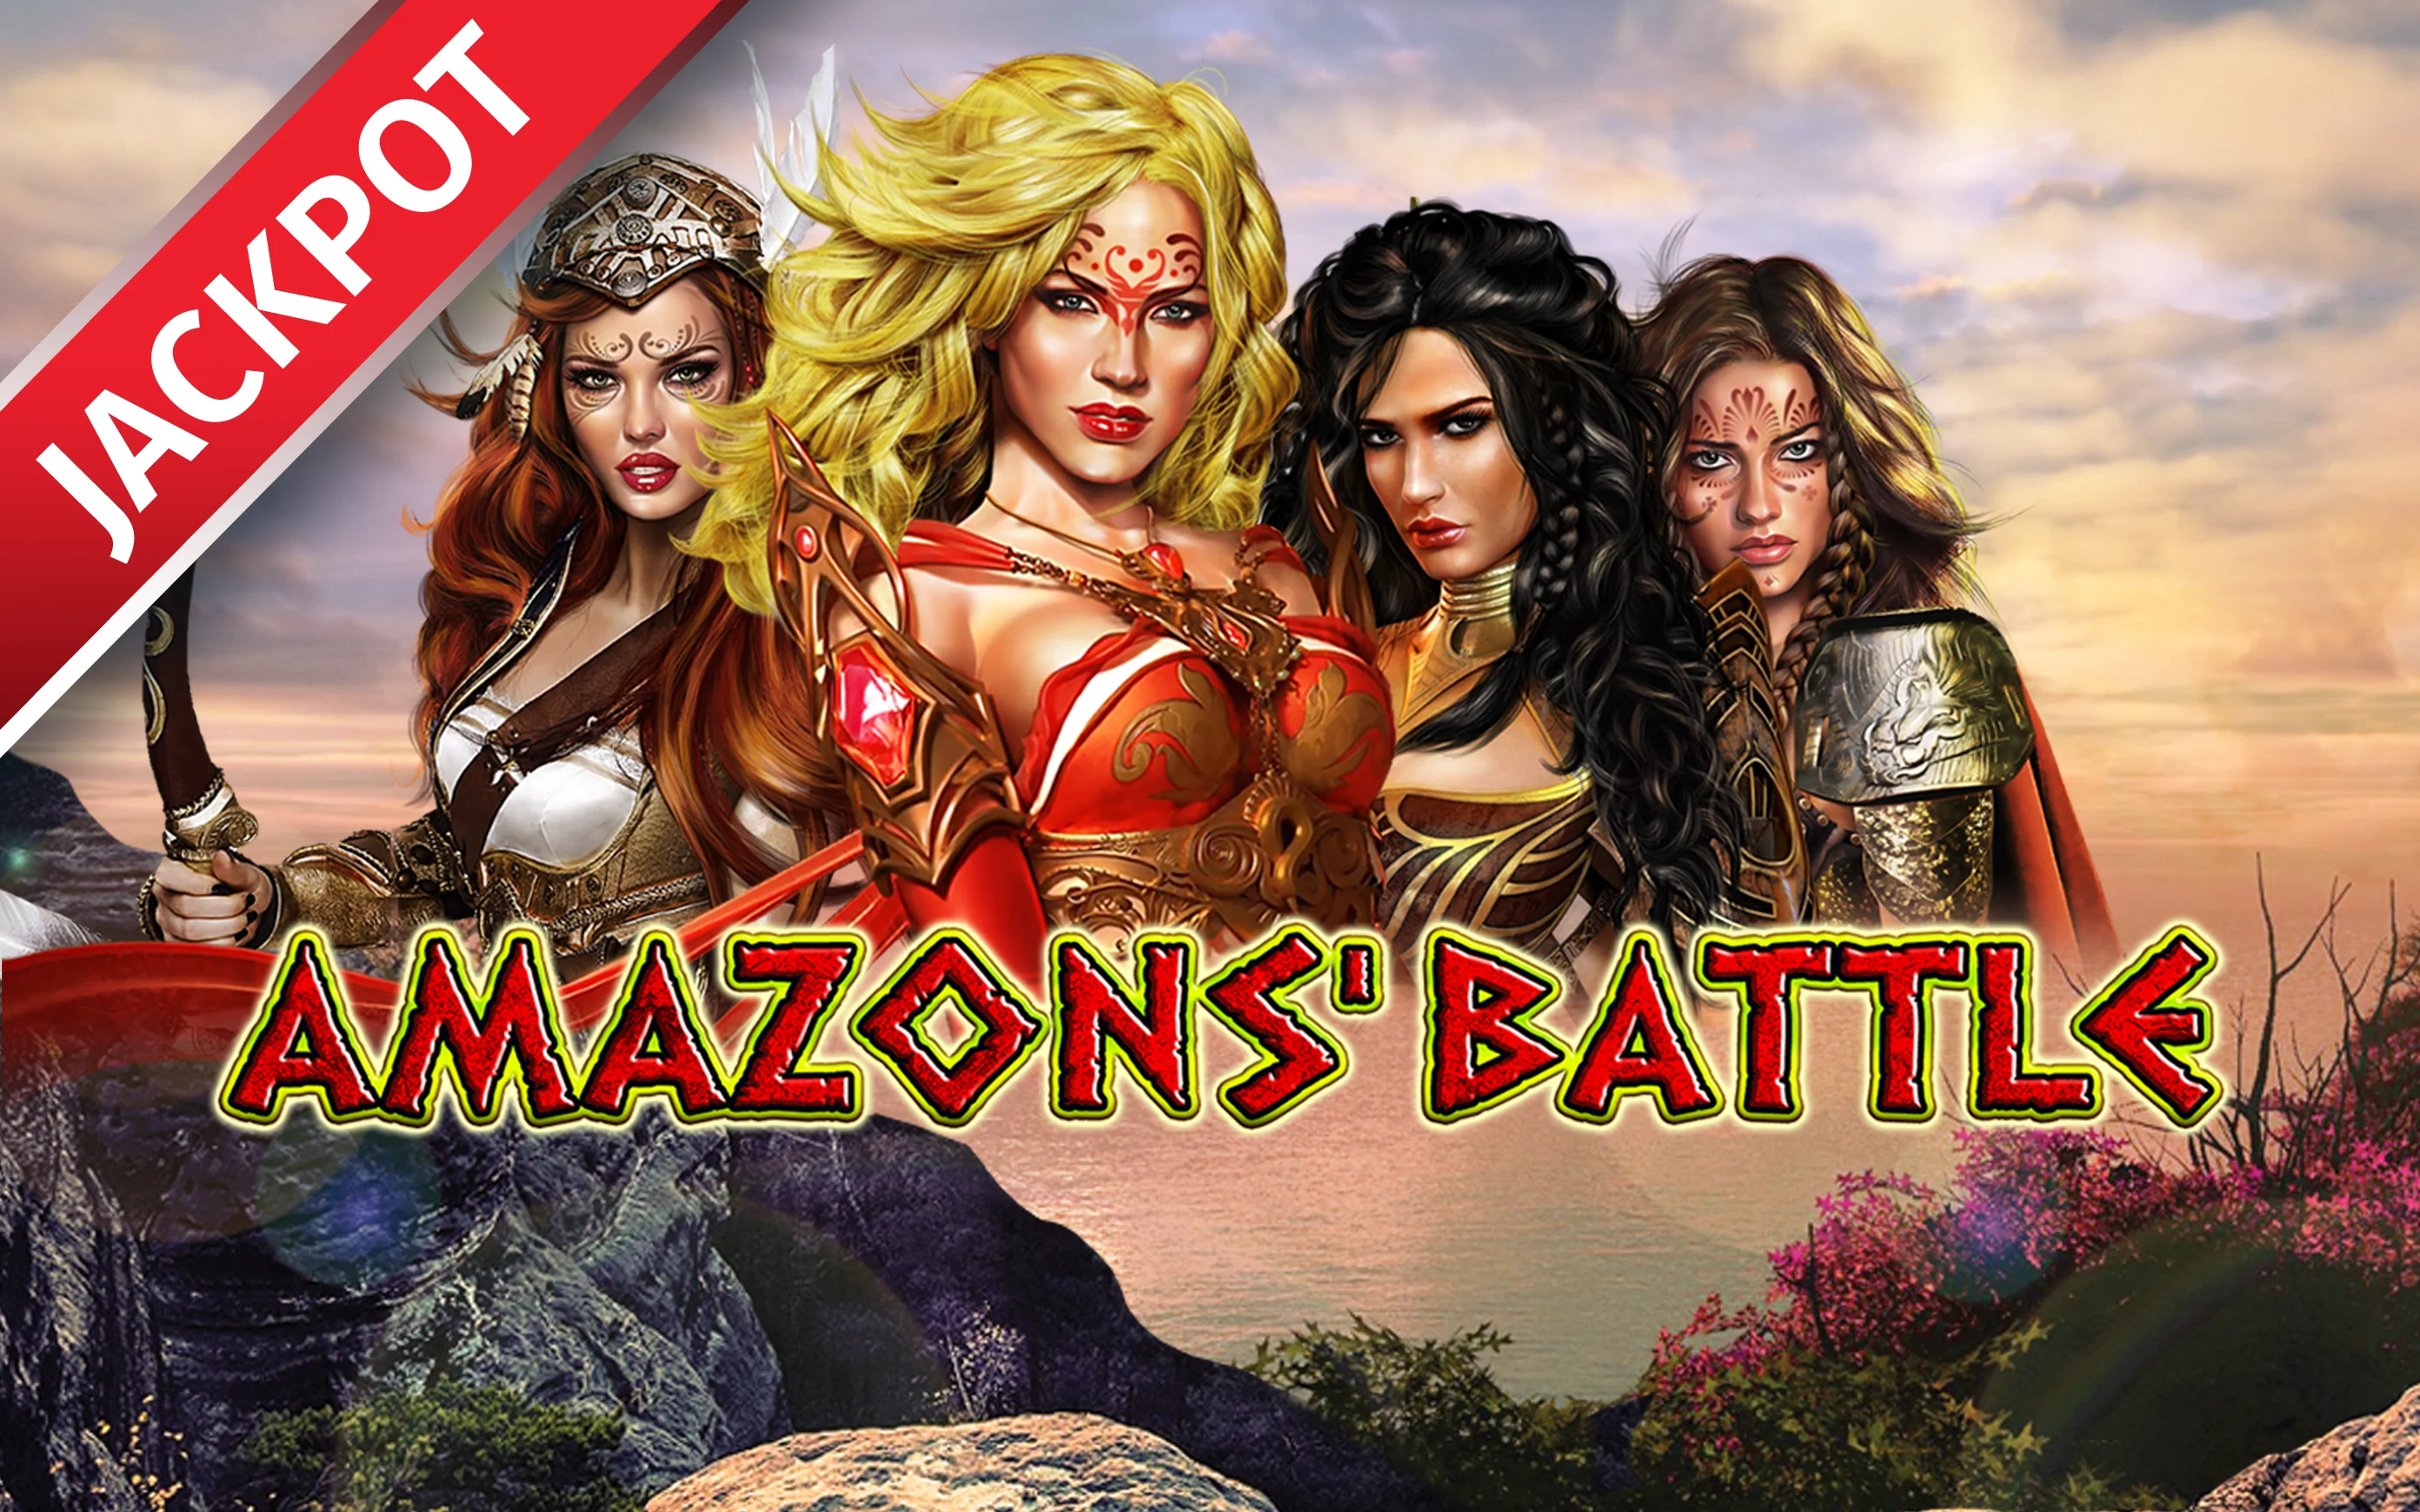 Play Amazons Battle on Starcasino.be online casino